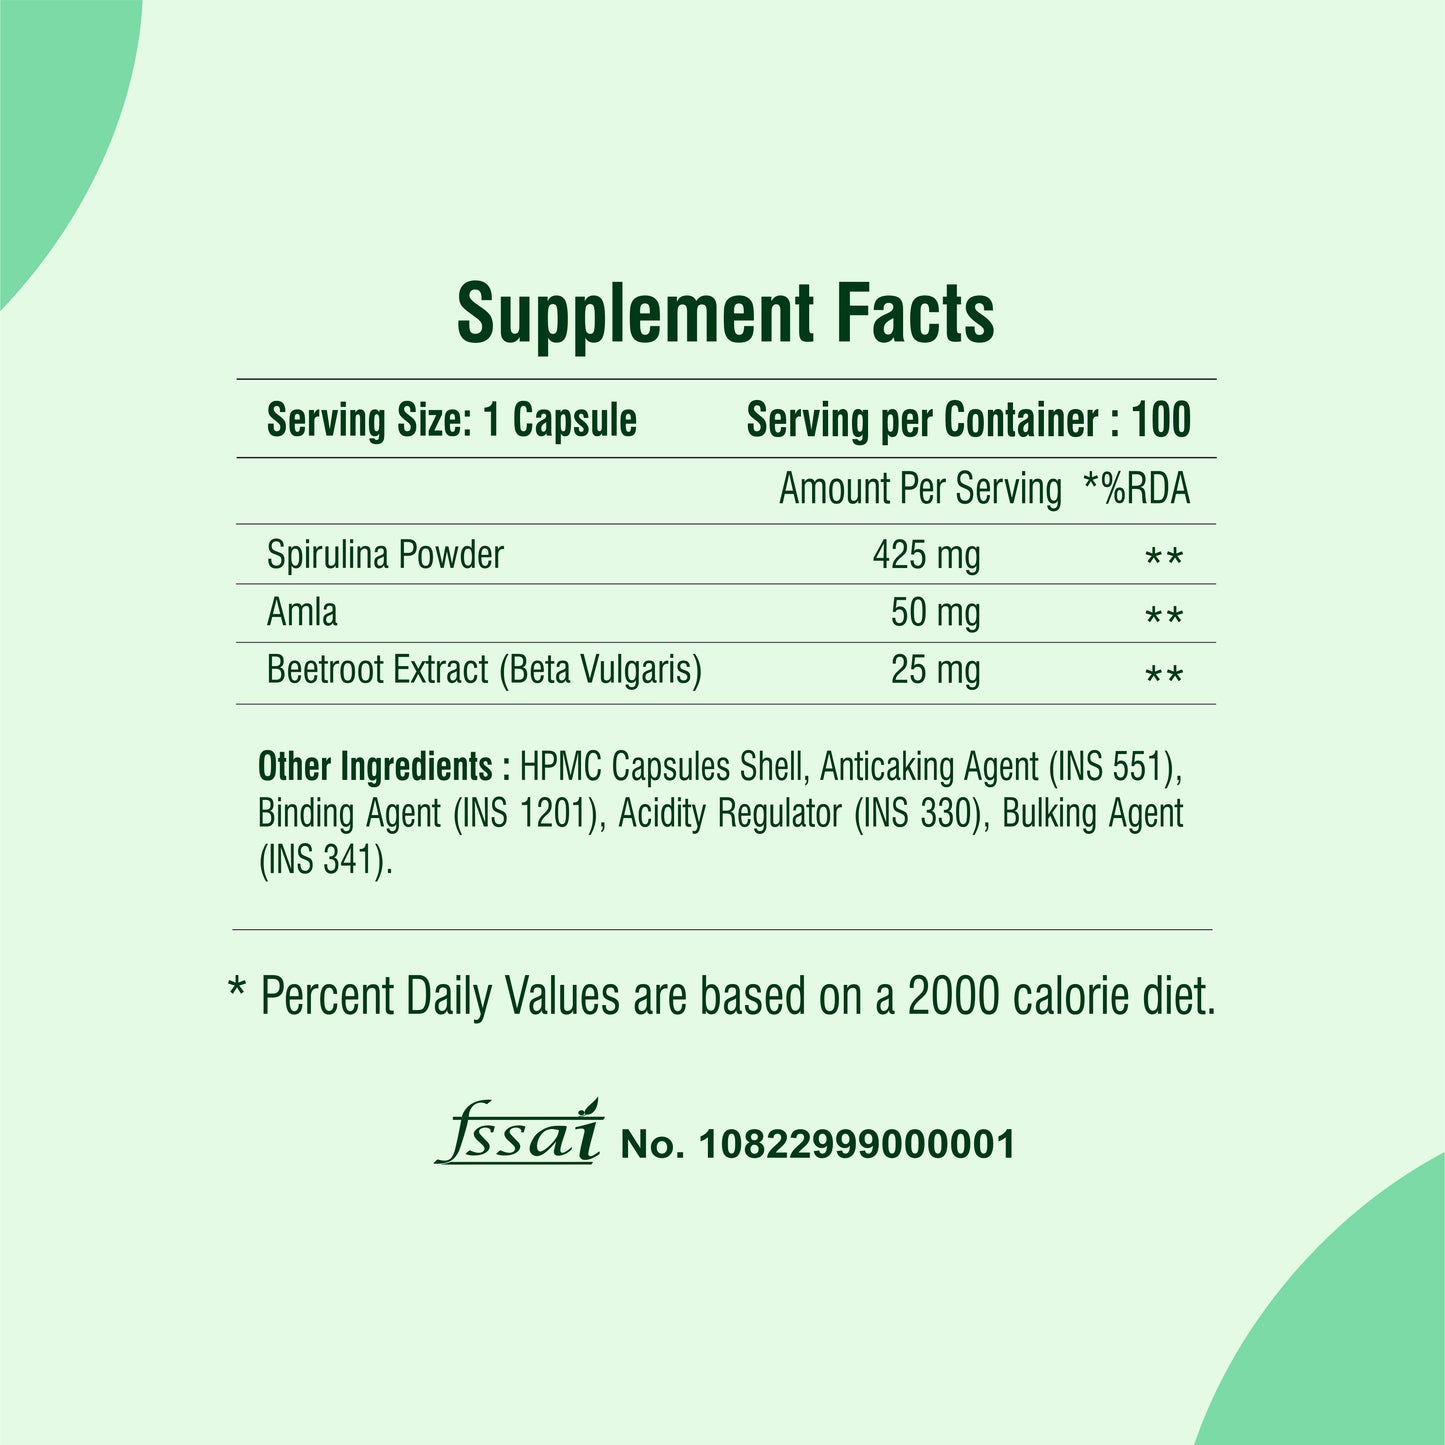 Raskam Spirulina-Super foods 60 capsules - Supports Weight Management & Boosts Immunity | For both Men & Women